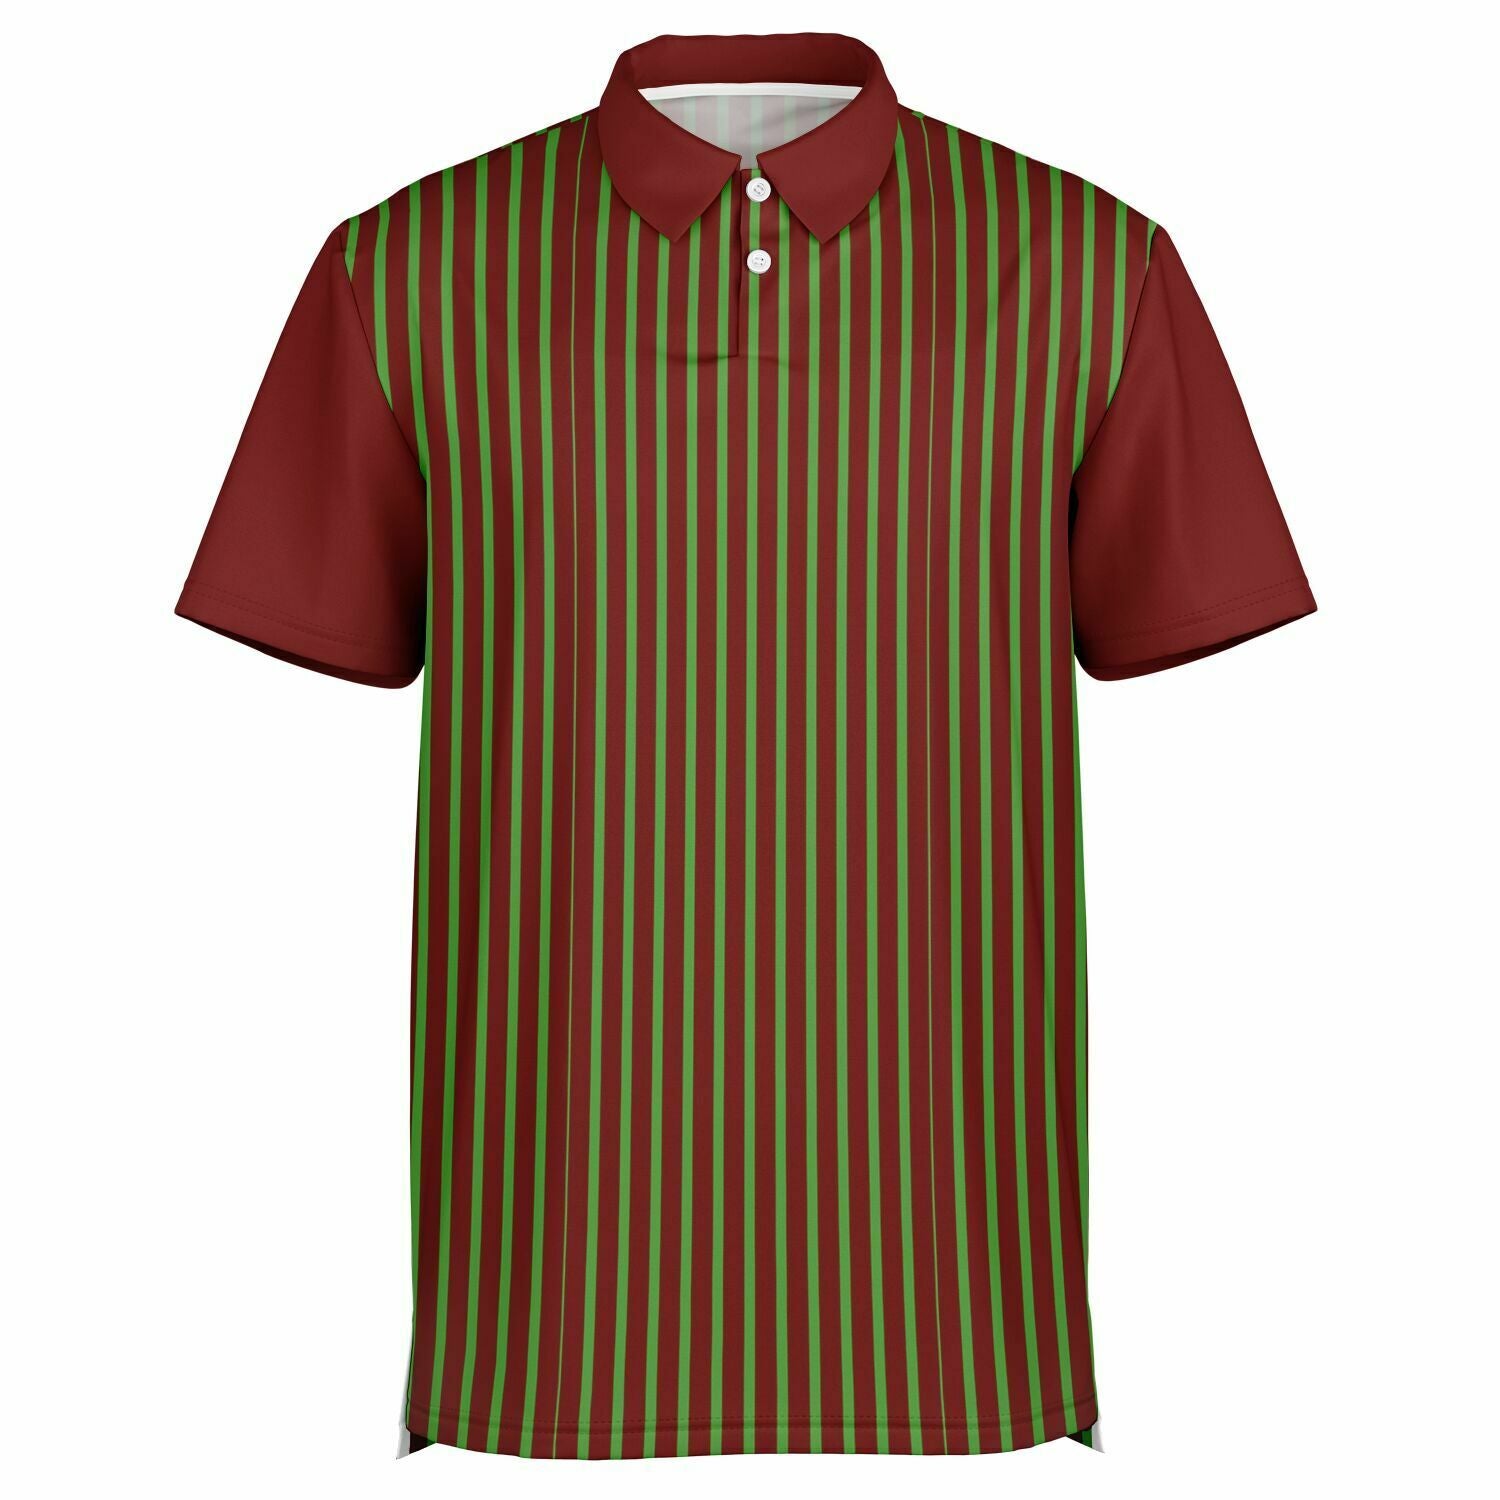 Performance Polo, Men's Claret & Kelly Green Striped Polo Shirt, sweat wicking, golf polo